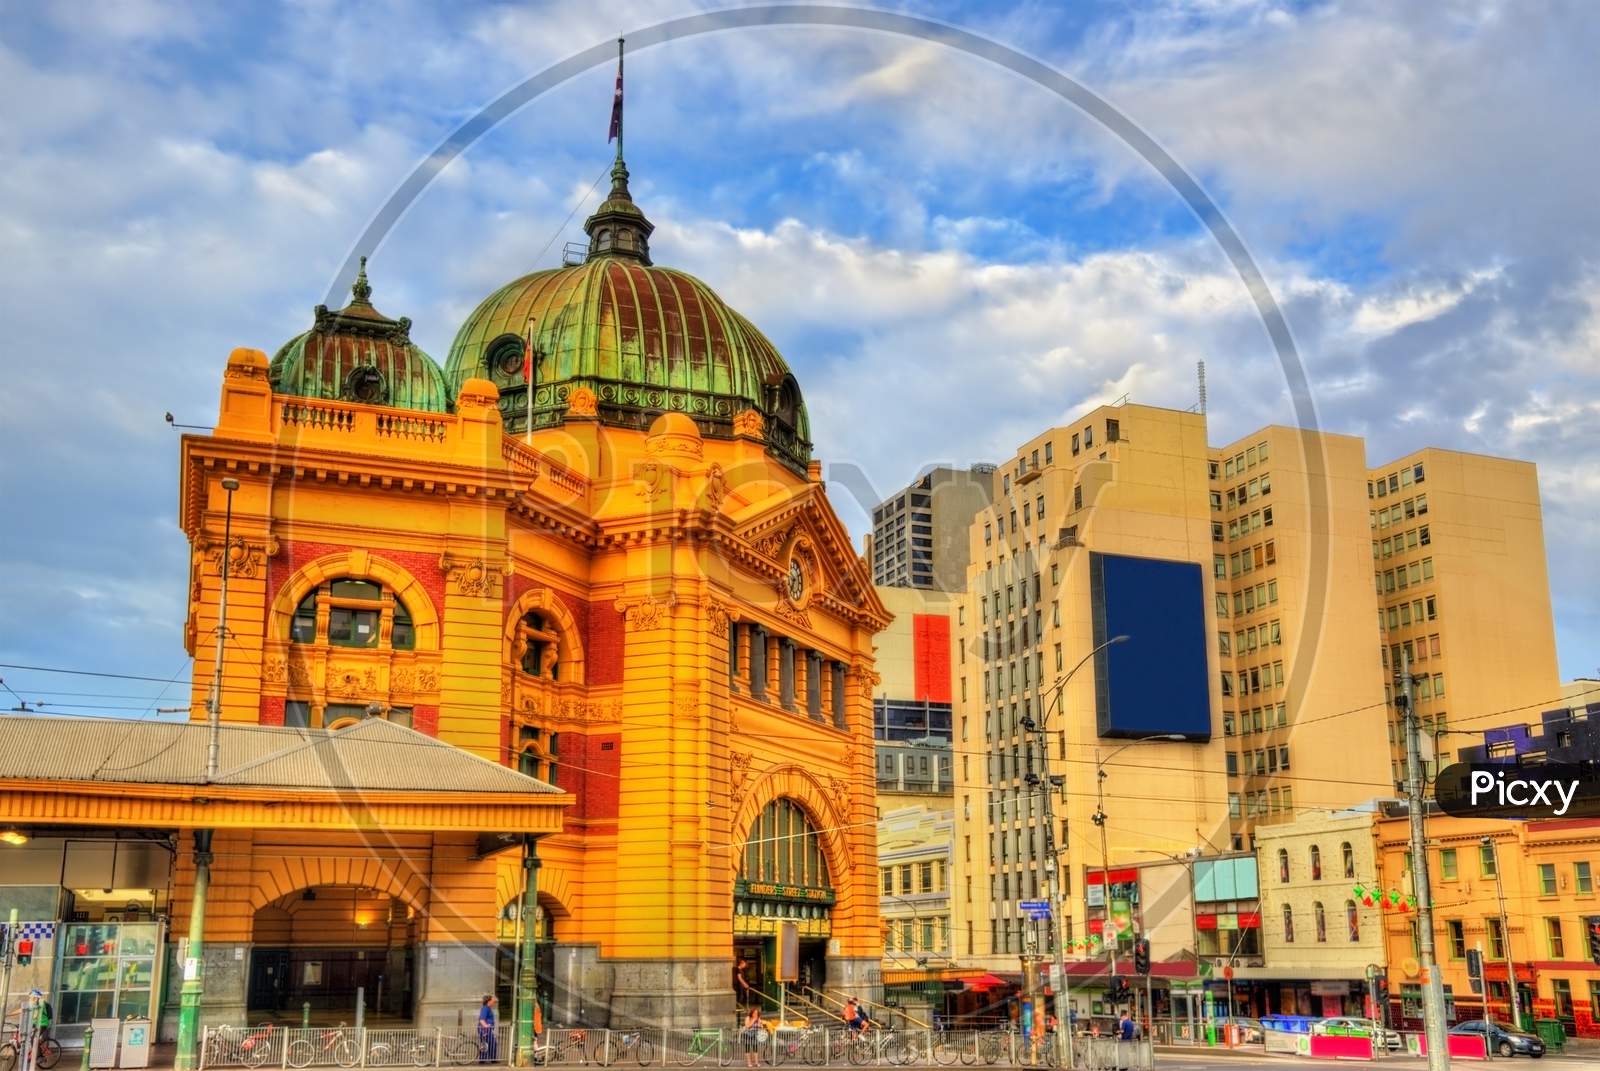 Flinders Street Railway Station, An Iconic Building Of Melbourne, Australia